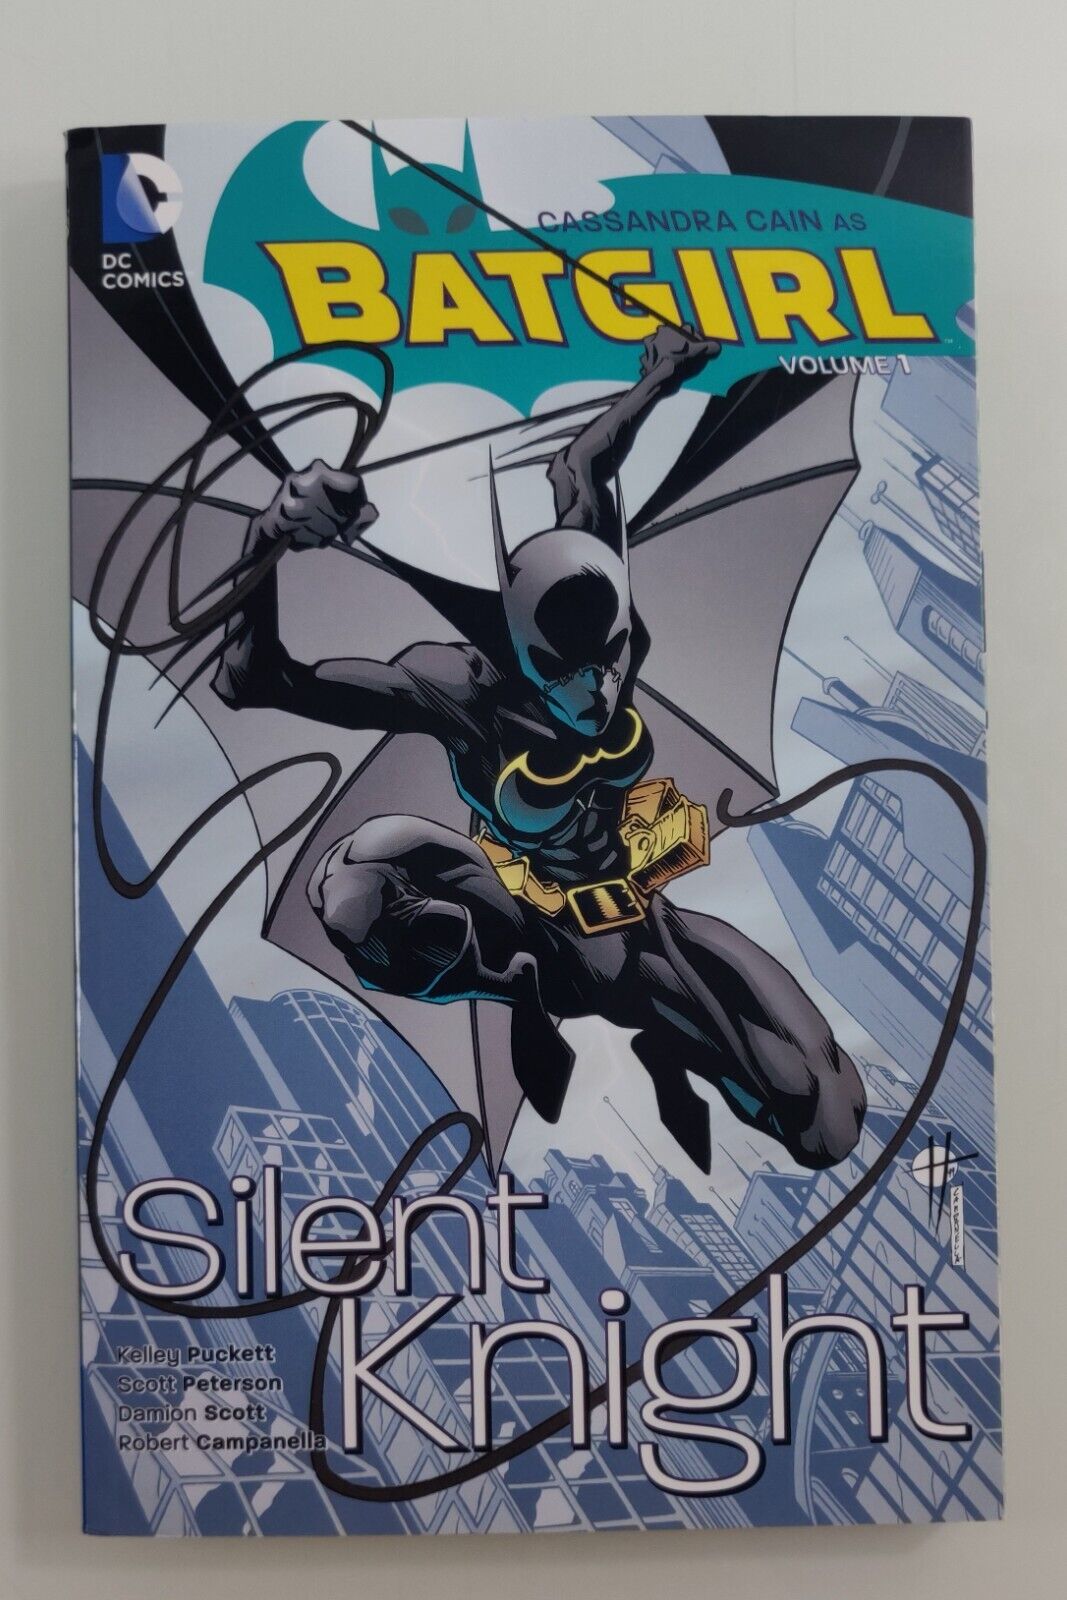 Batgirl Vol. 1 : Silent Knight by Kelley Puckett (DC Comics, 2016)